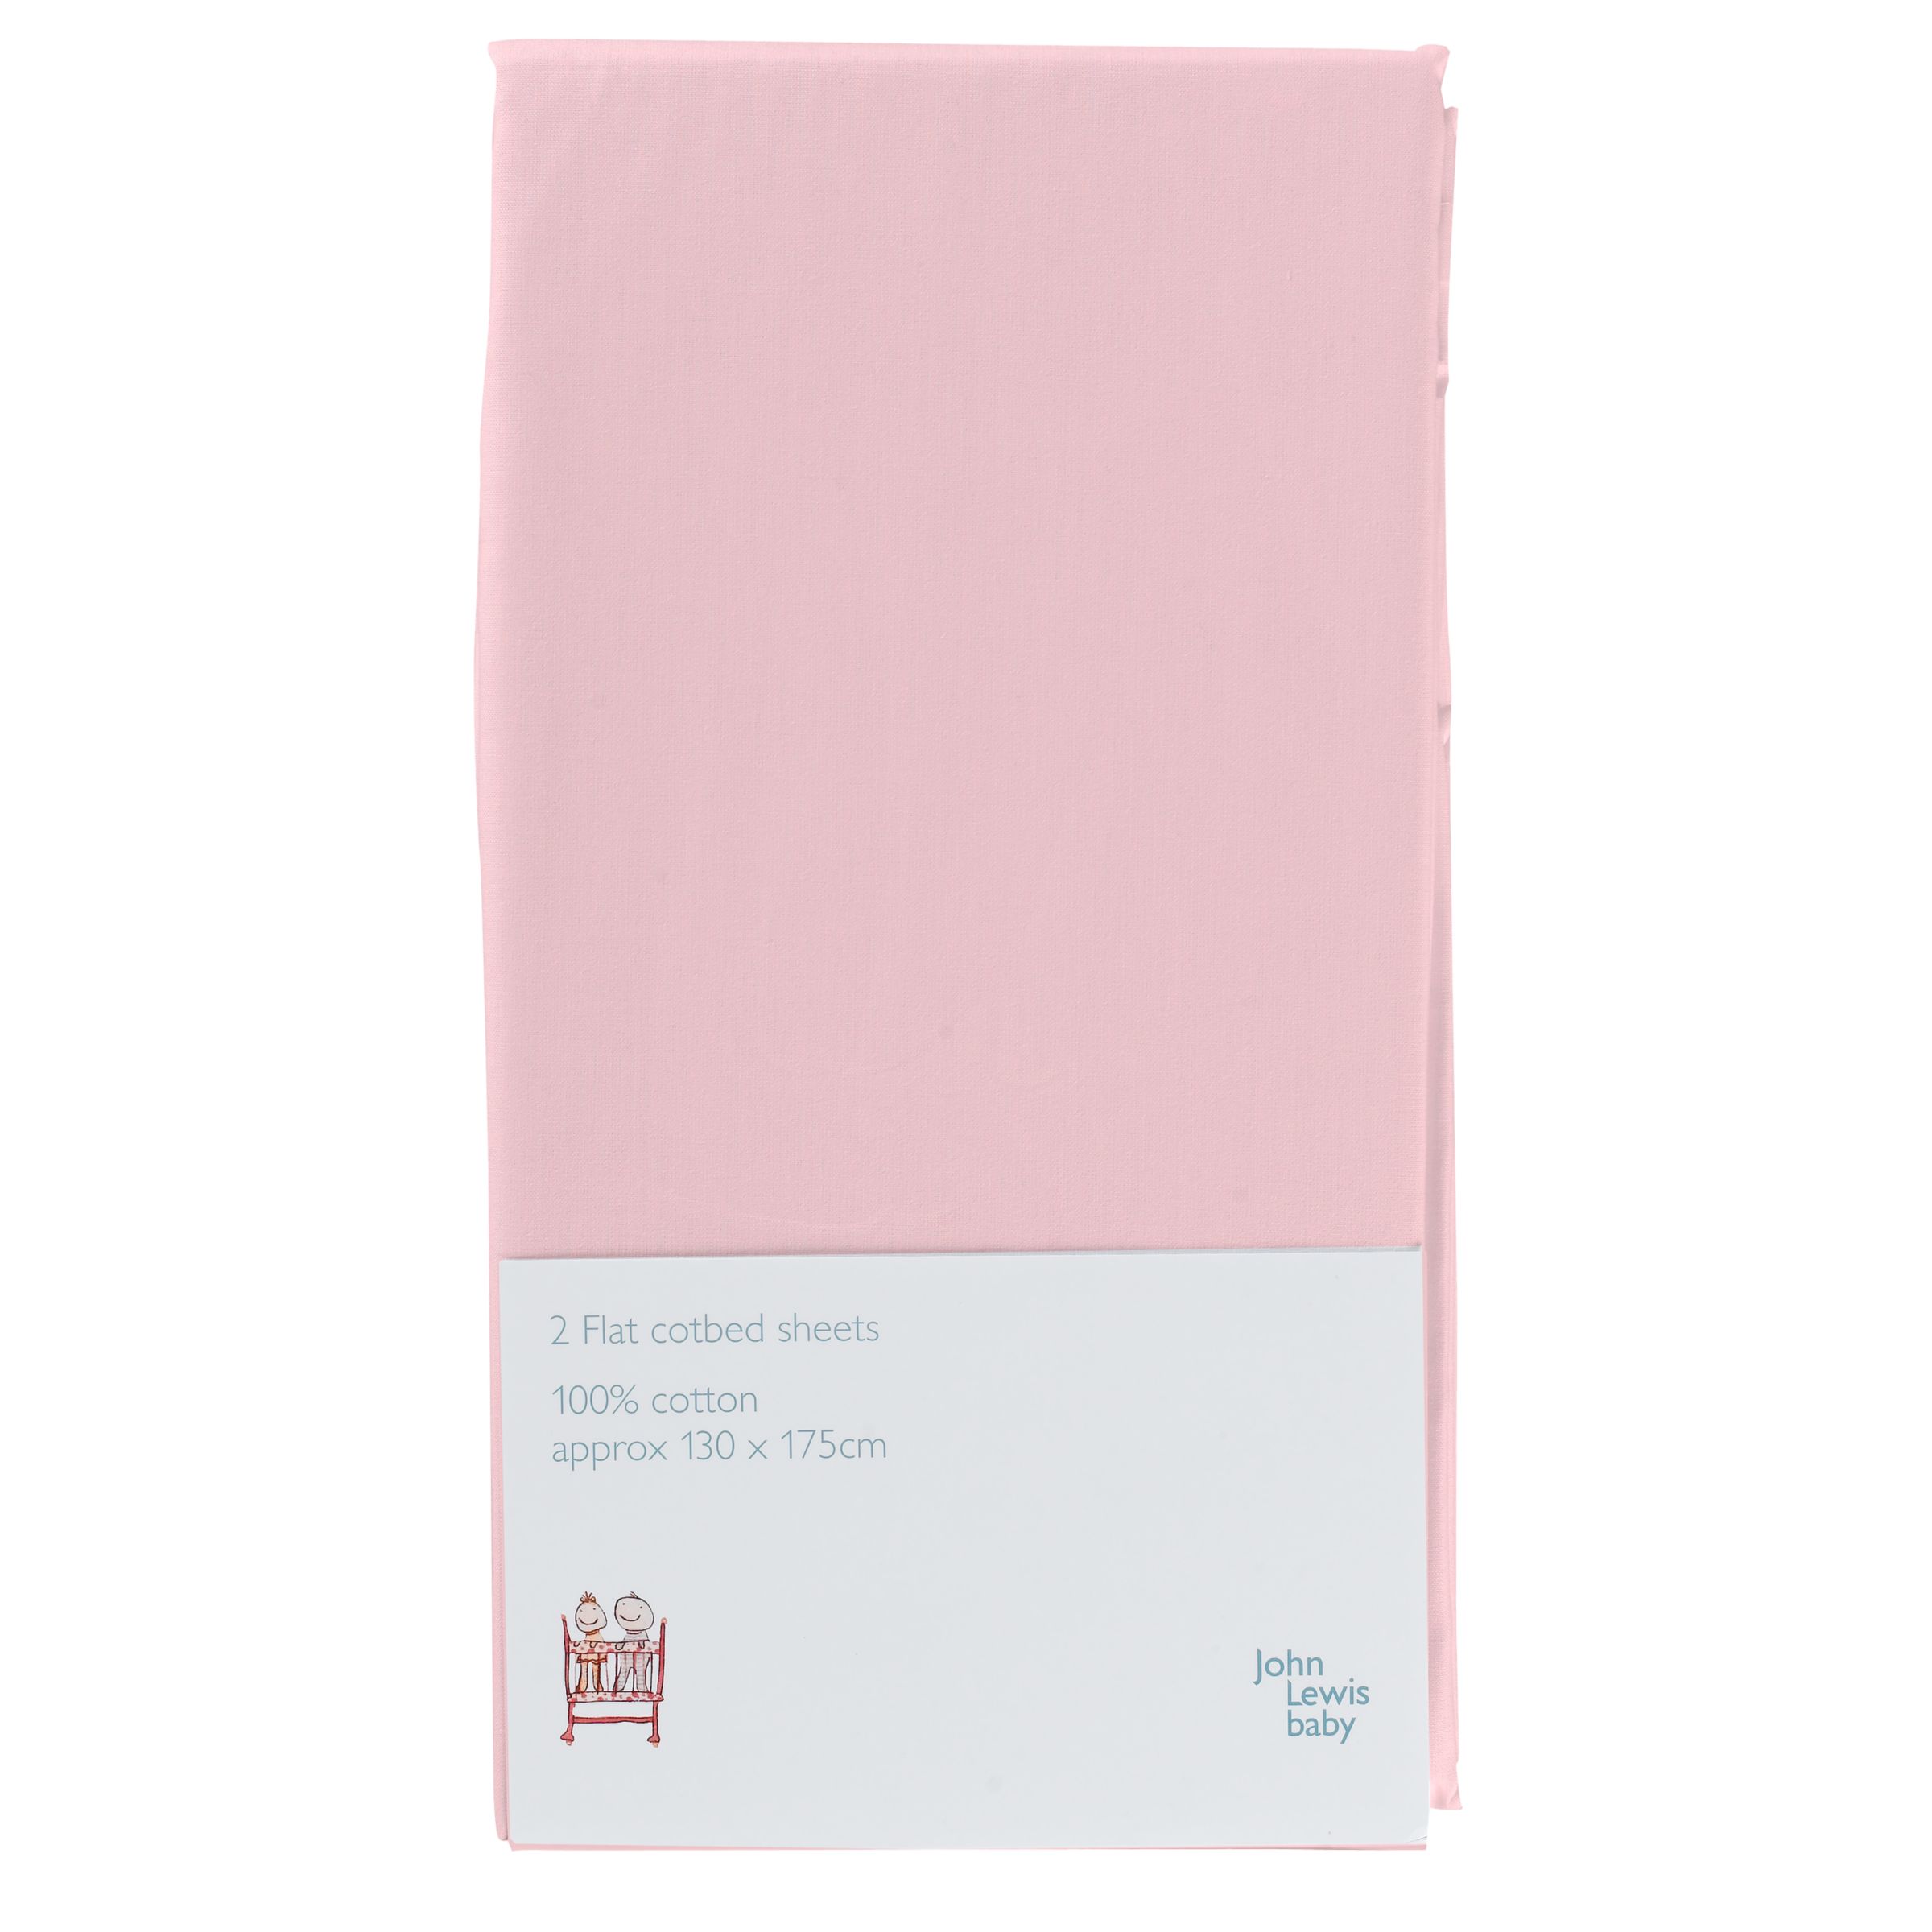 John Lewis Baby Flat Cotbed Sheet, Pack of 2, Pink